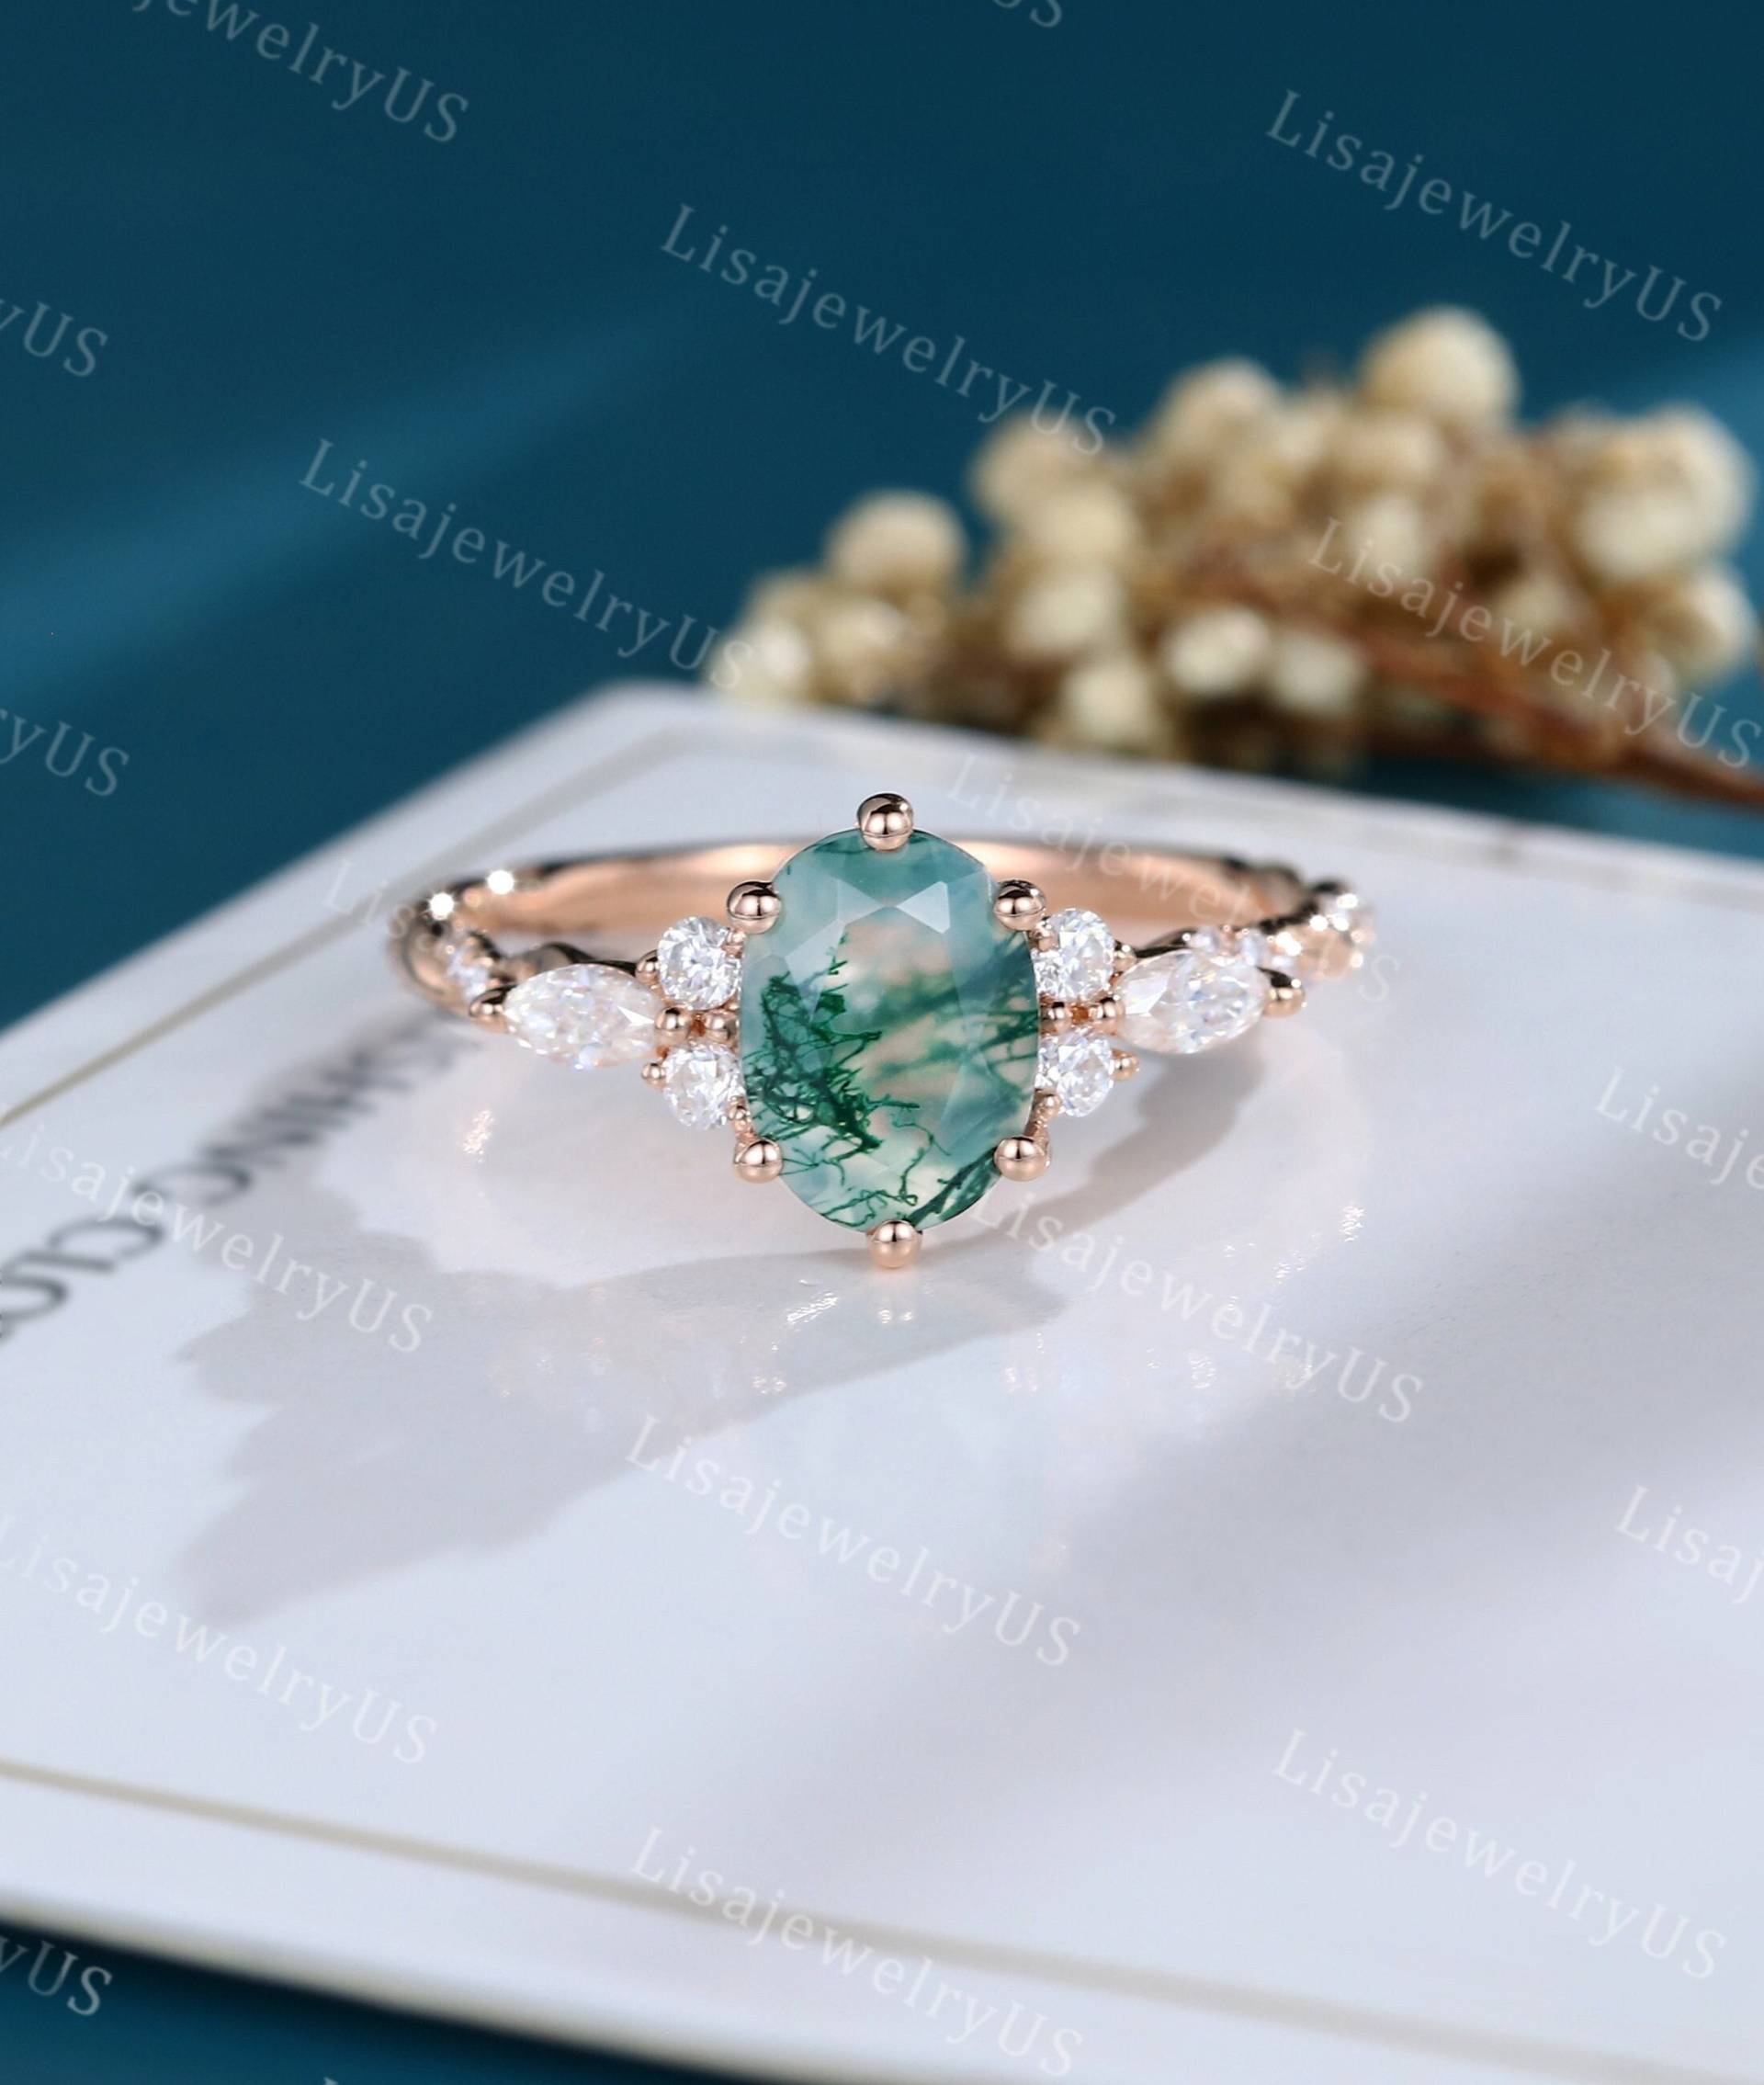 Oval Moosachat Verlobungsring Roségold Vintage Art Deco Diamanten Ring 3/4 Eternity Gedrehter Brautring von LisajewelryUS